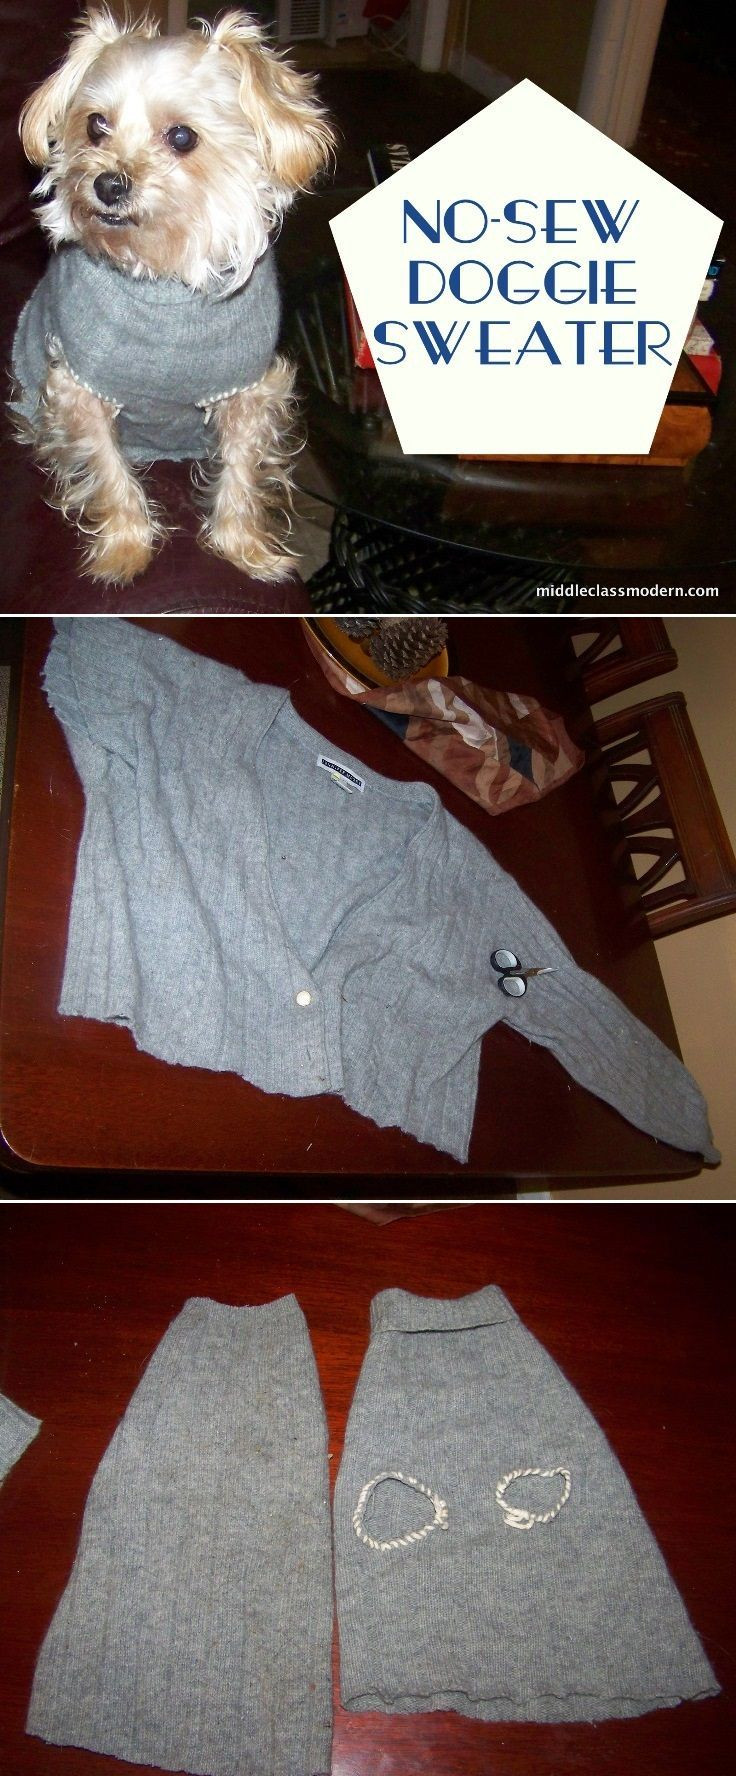 DIY Dog Sweater No Sew
 A No Sew Dog Sweater Cute DIY Pet Clothes sewing